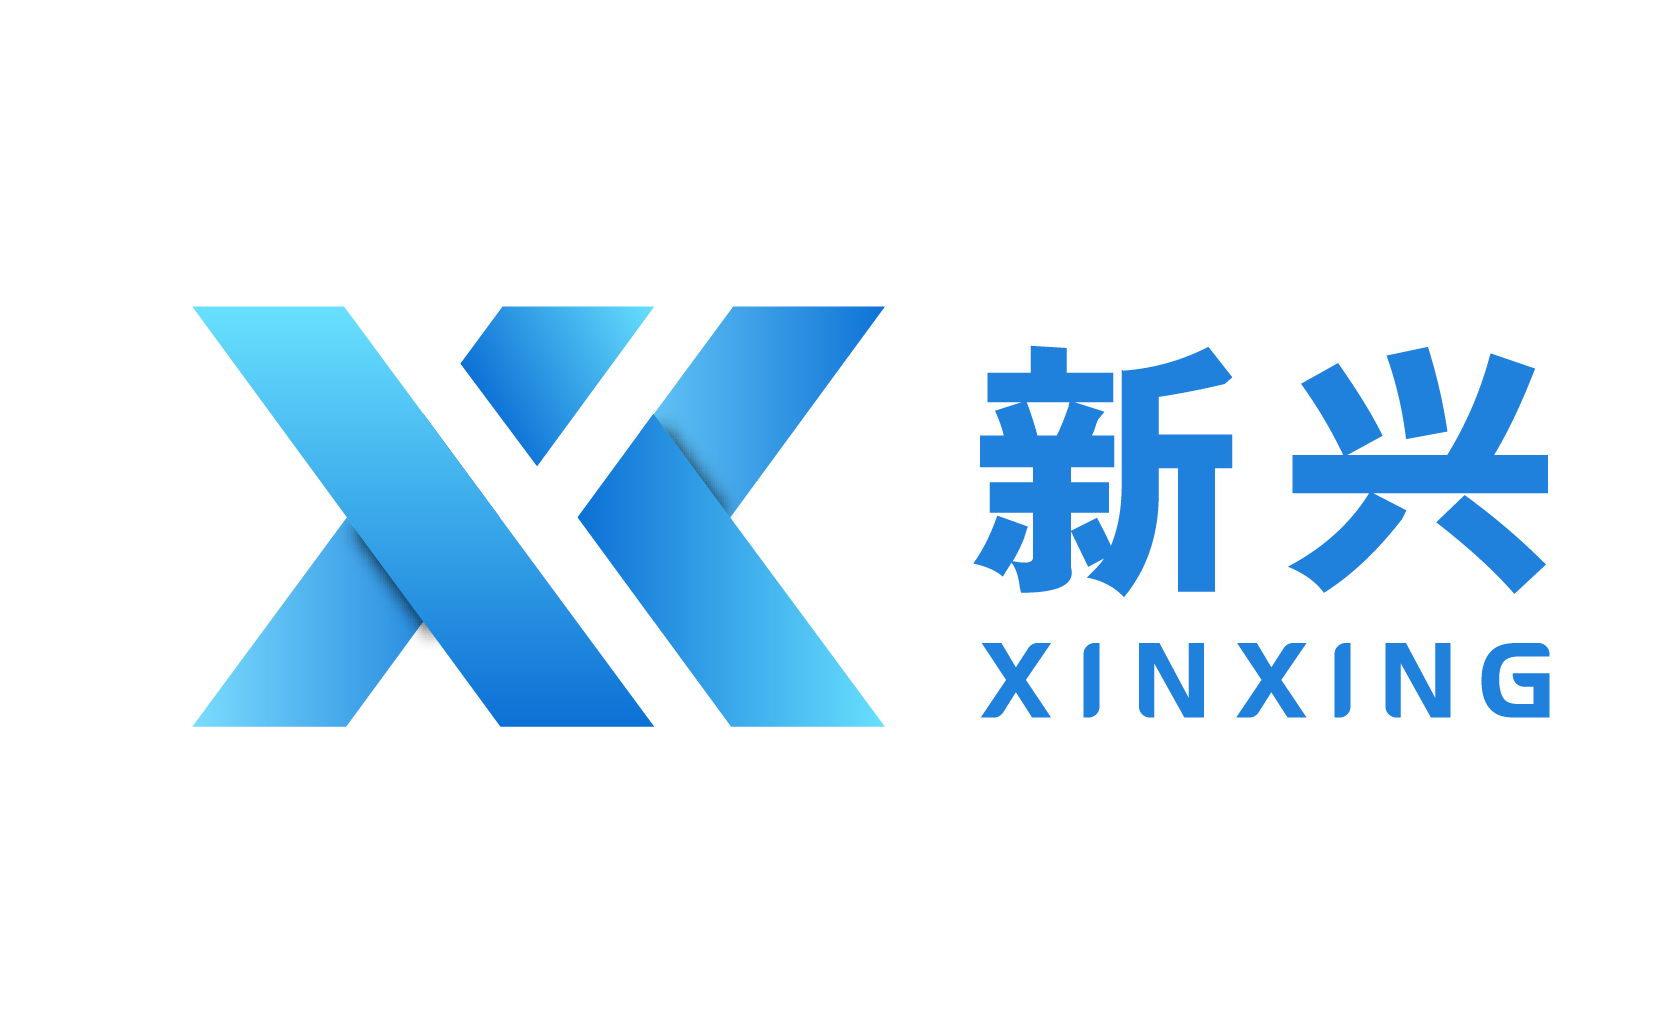 Tapis protection de sol - XXGP-01 - Shandong Ningjin Xinxing Chemical Co.,  Ltd. - en composite / noir / bleu